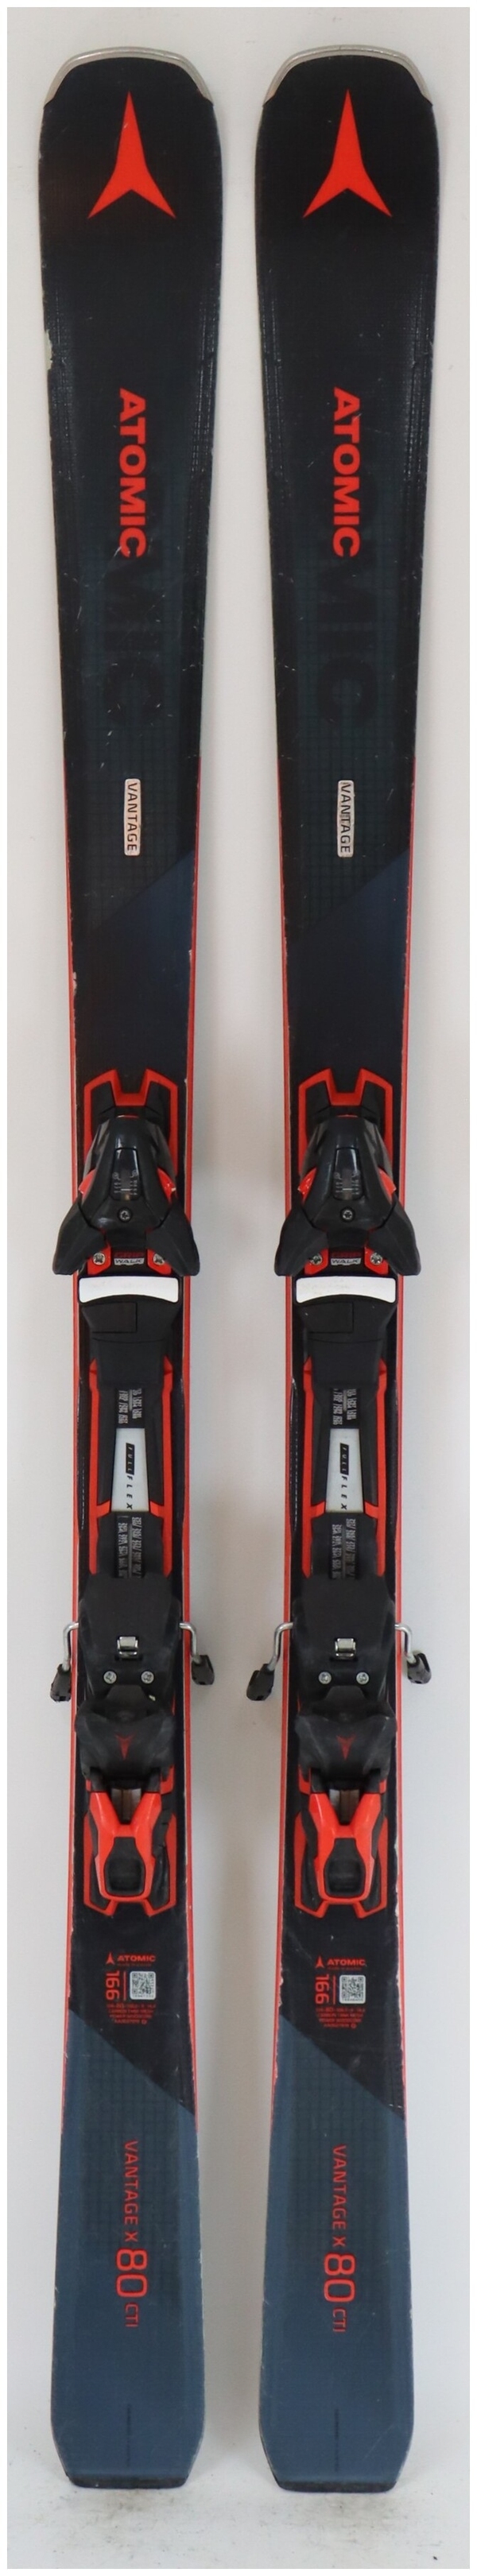 2019 Atomic Vantage X 80 CTI 166cm Used Demo Skis on Sale - Powder7